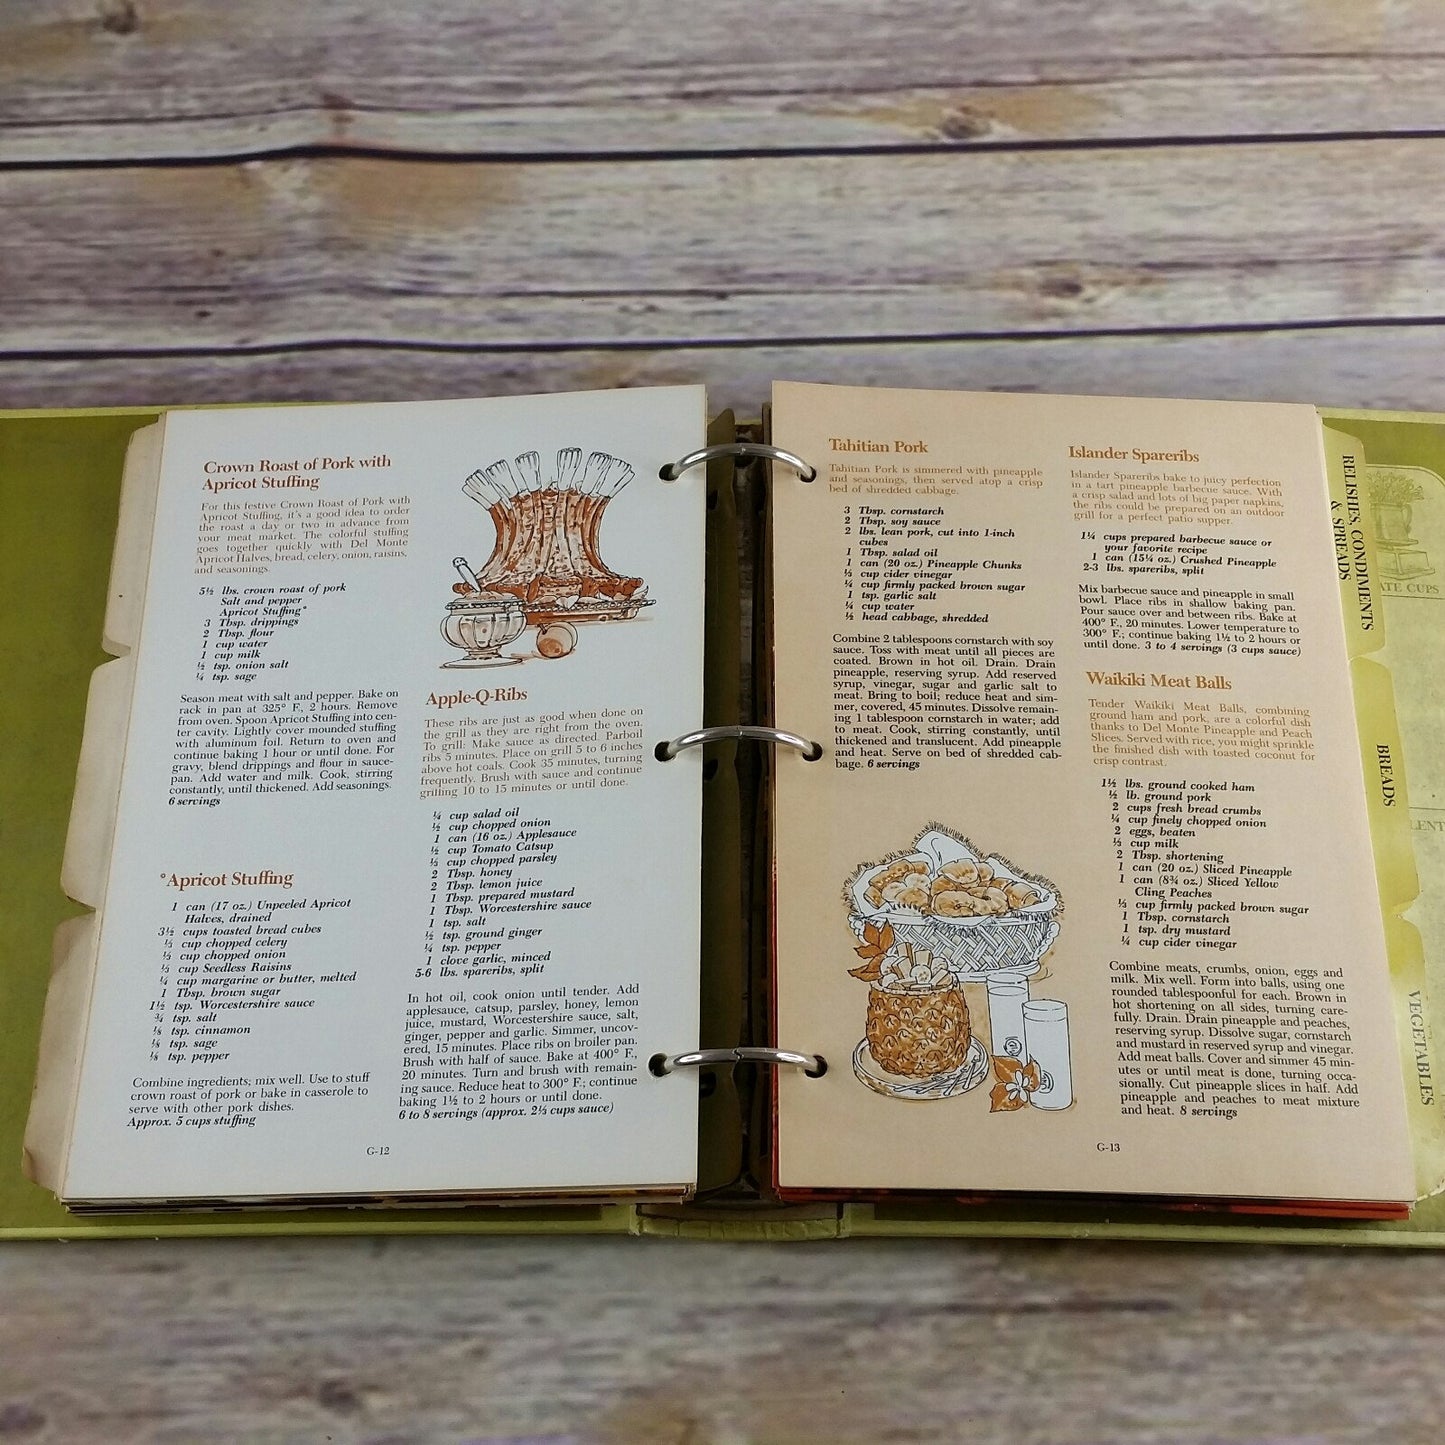 Vintage Cookbook Del Monte Kitchens Recipes 3 Ring Binder 1972 Hardcover 1st Printing 1970s Del Monte Corporation San Francisco CA